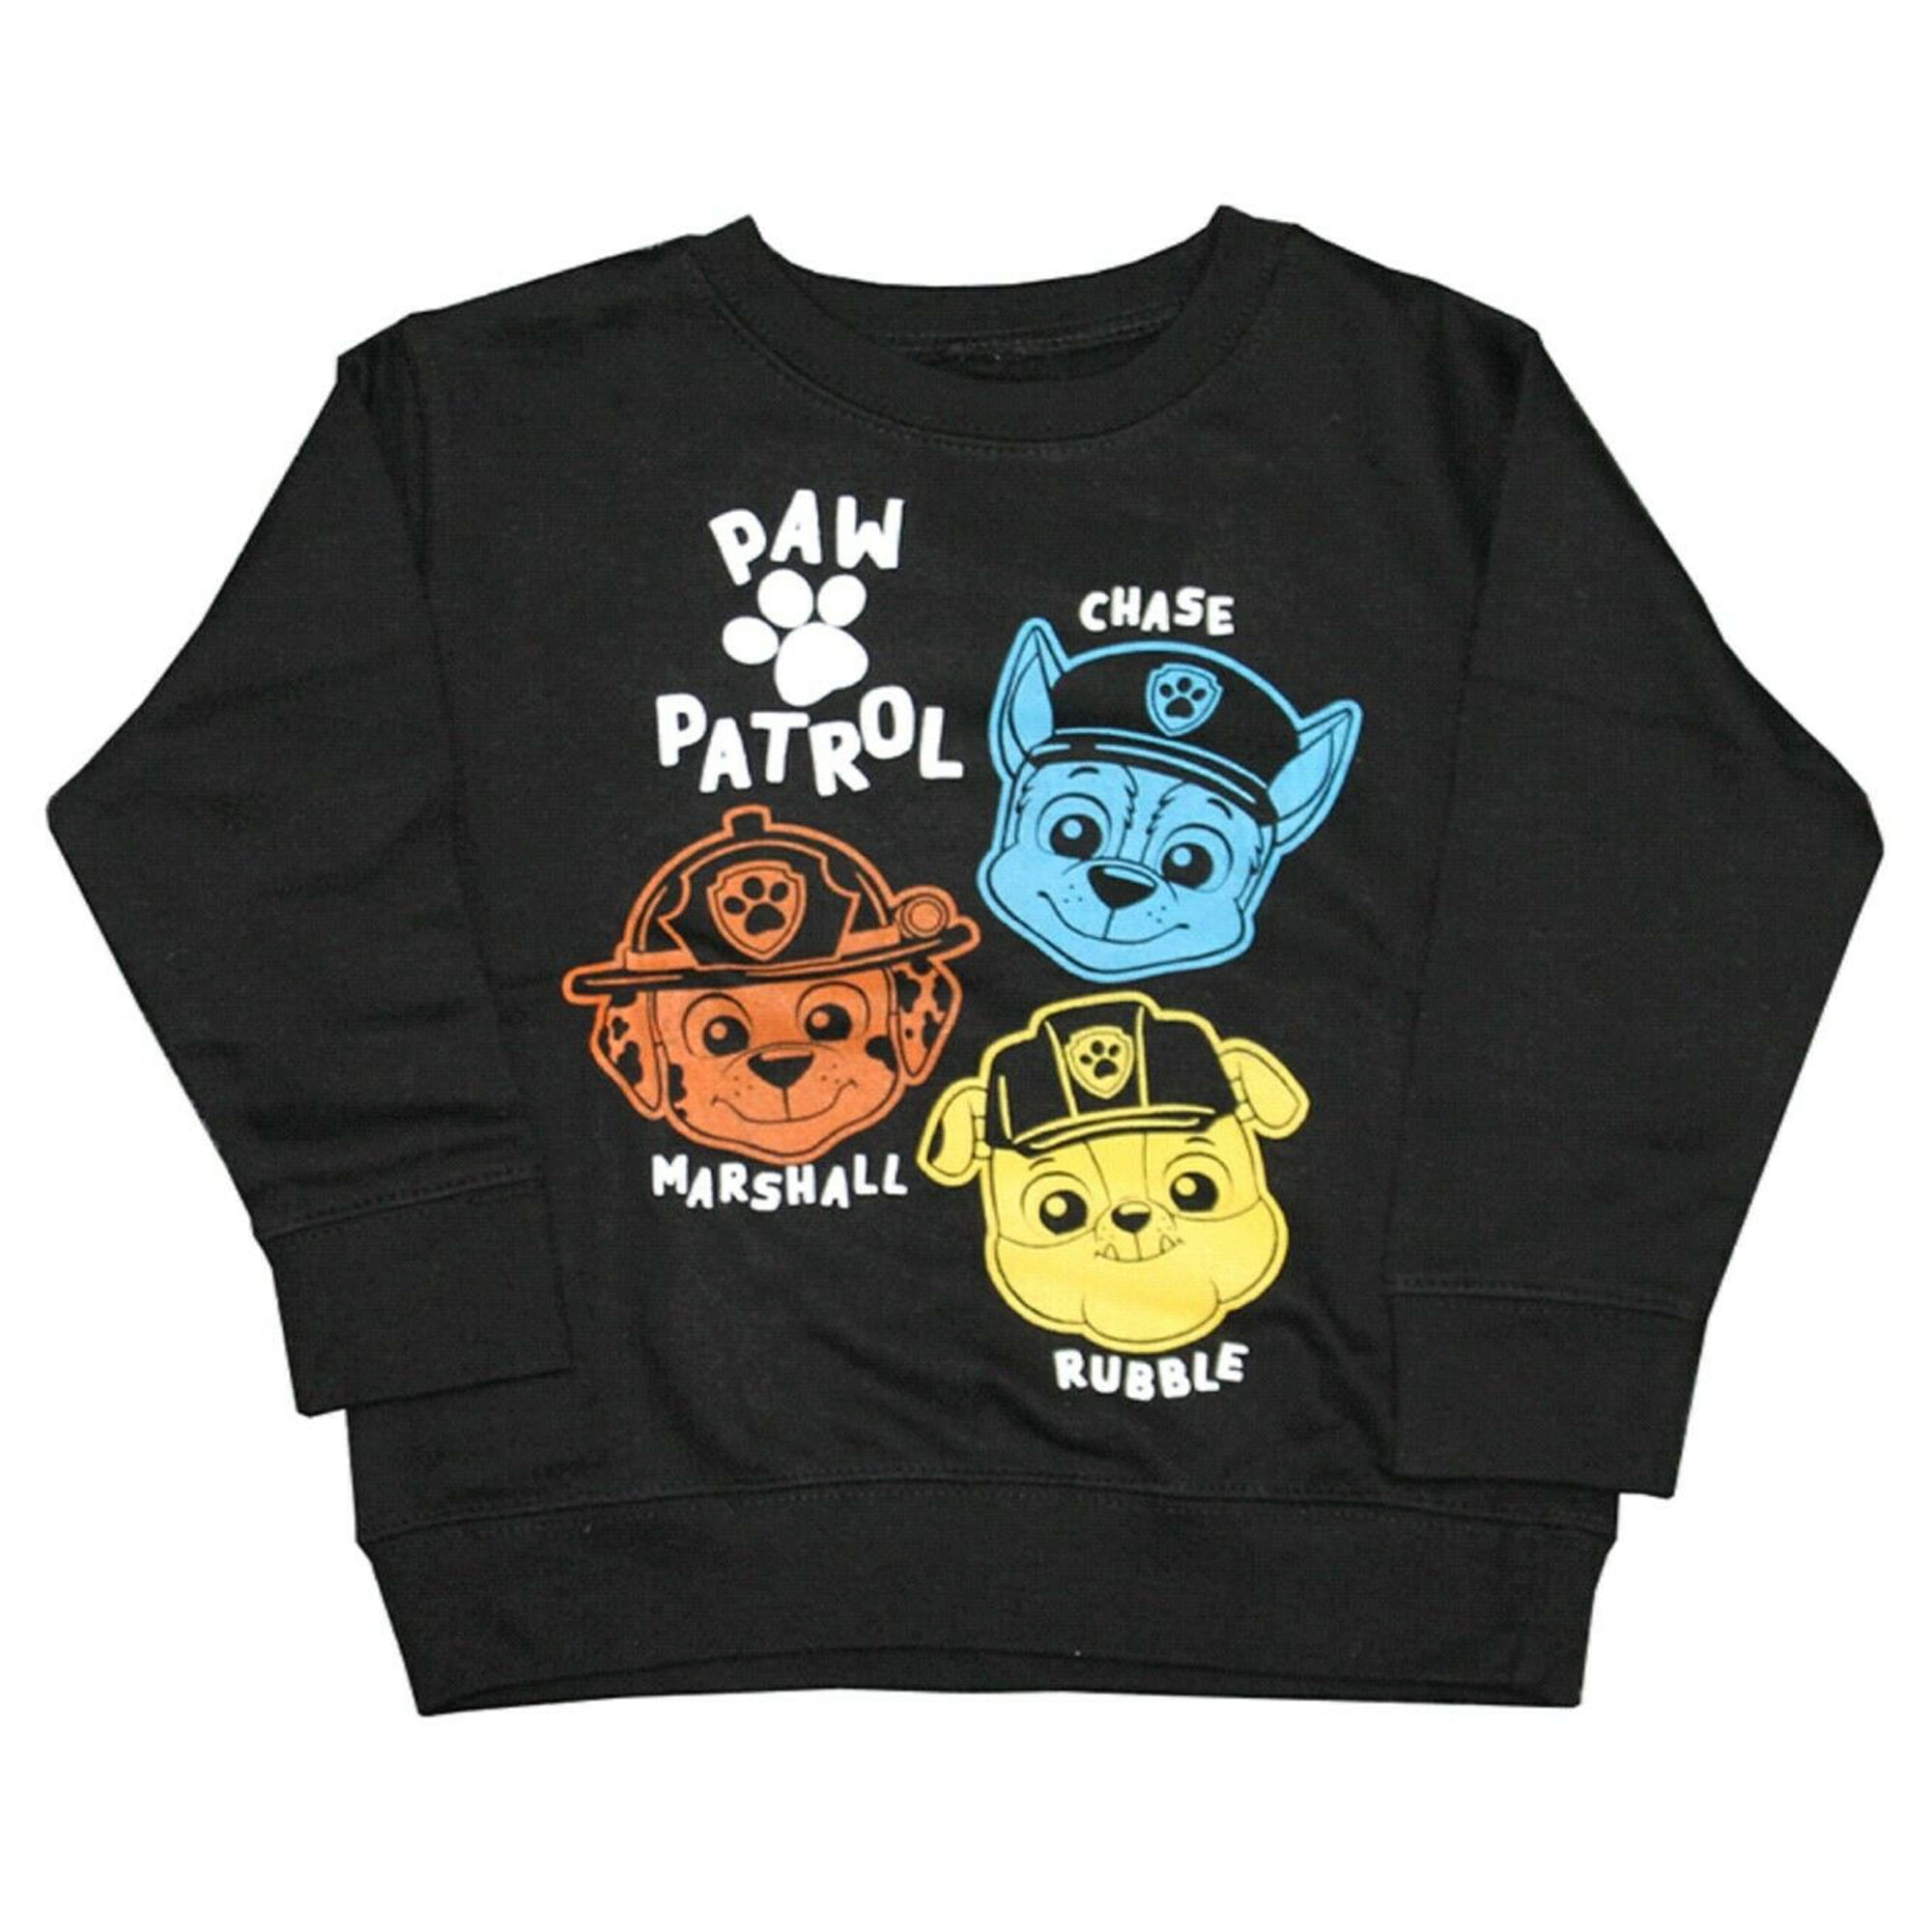 Patrol, Chase Paw Boy\'s Marshall, Rubble & Sweatshirt Crewneck Toddler